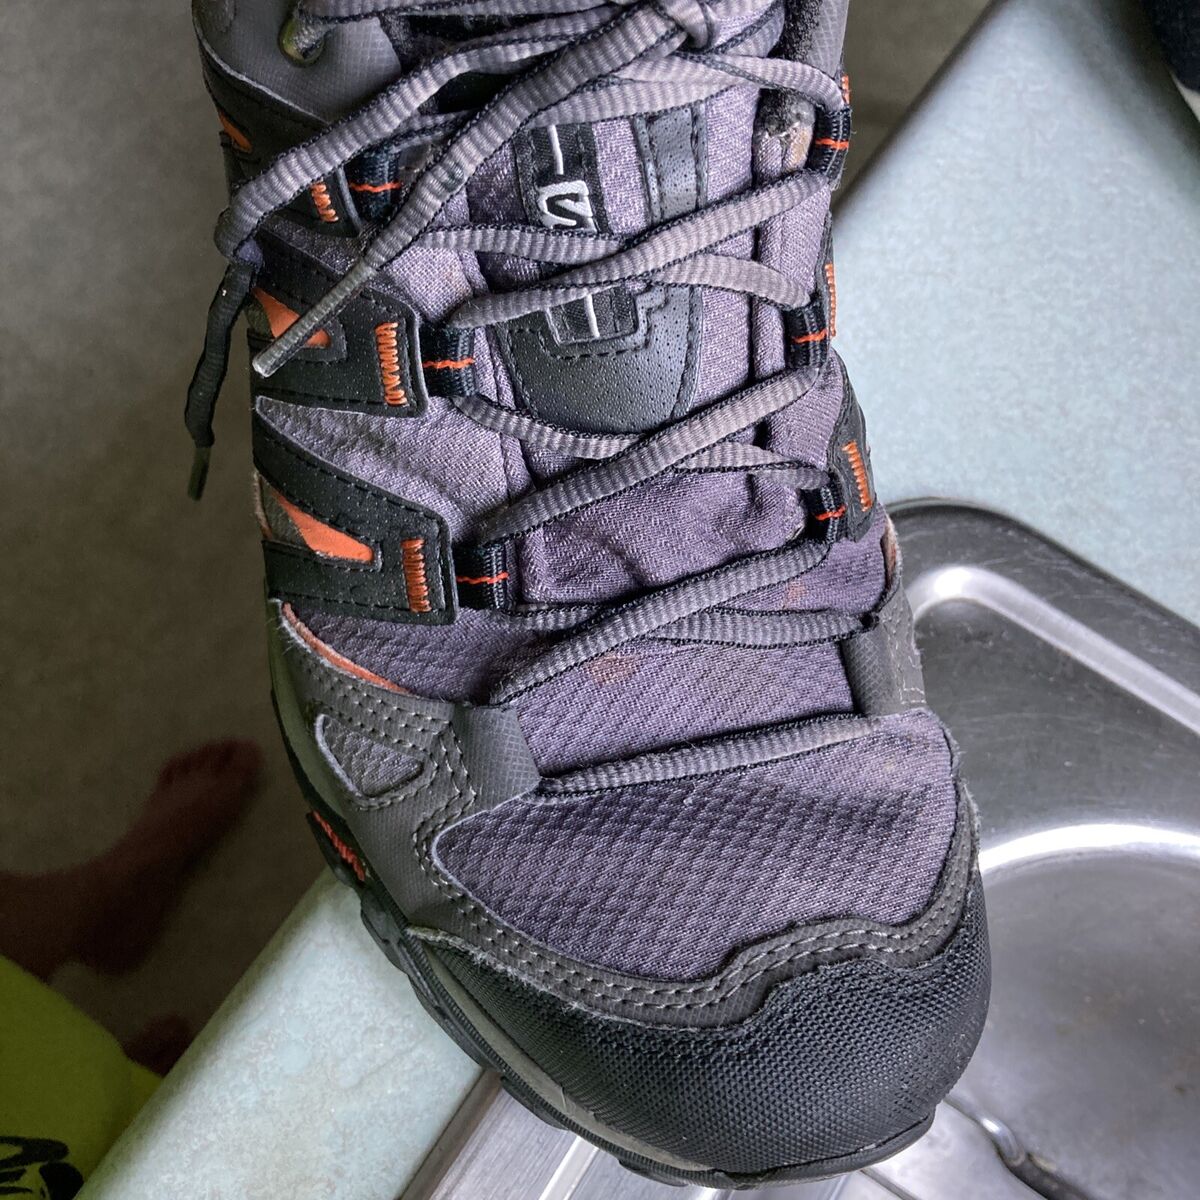 GTX 327305 Goretex Trekking Hiking Shoes Men's Size 10 Gray Black | eBay